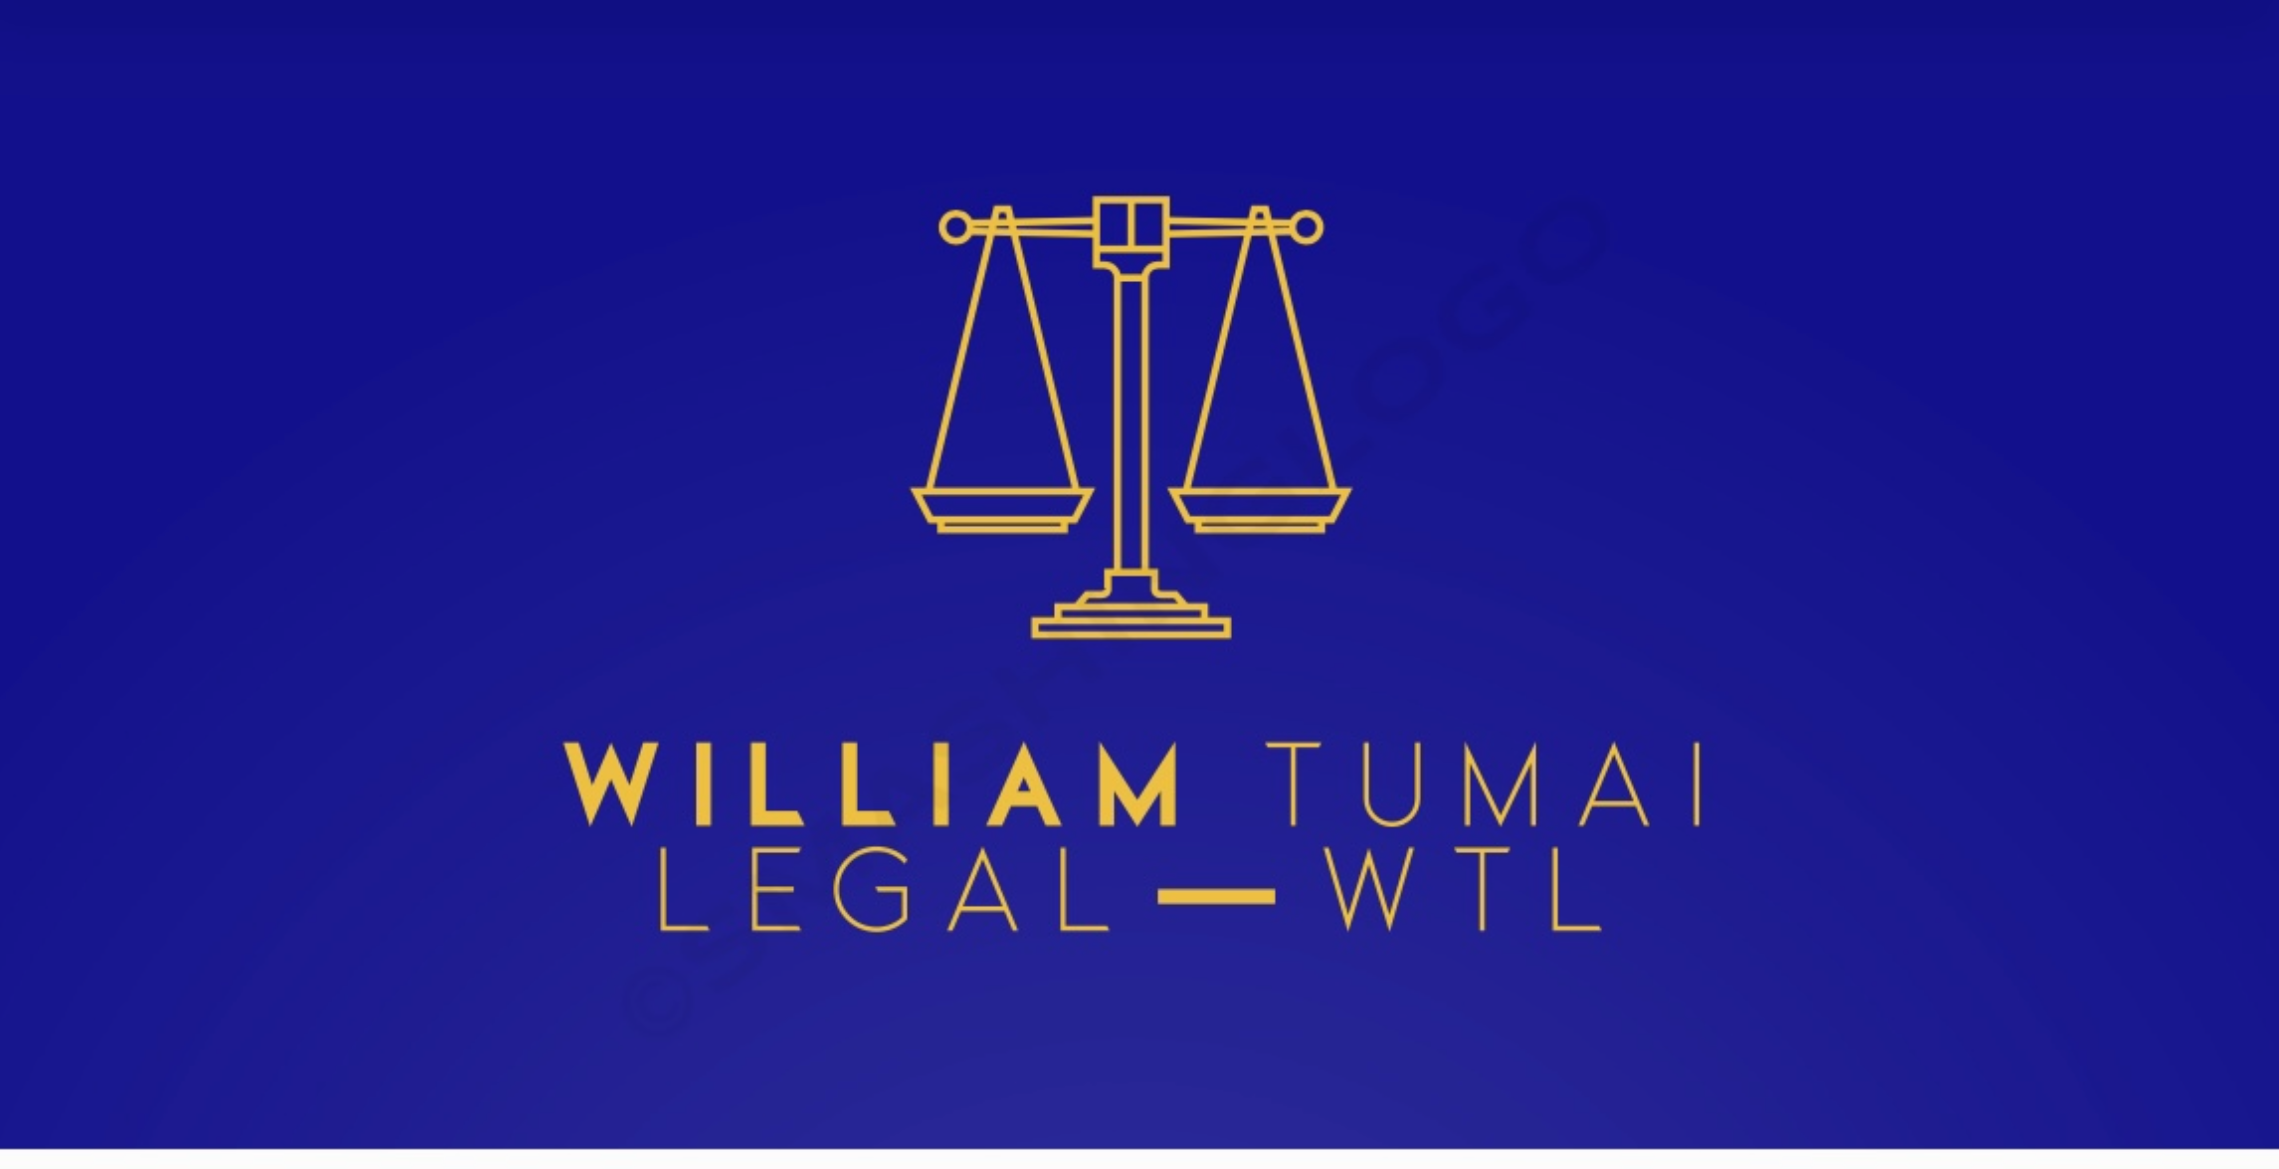 William Tumai Legal